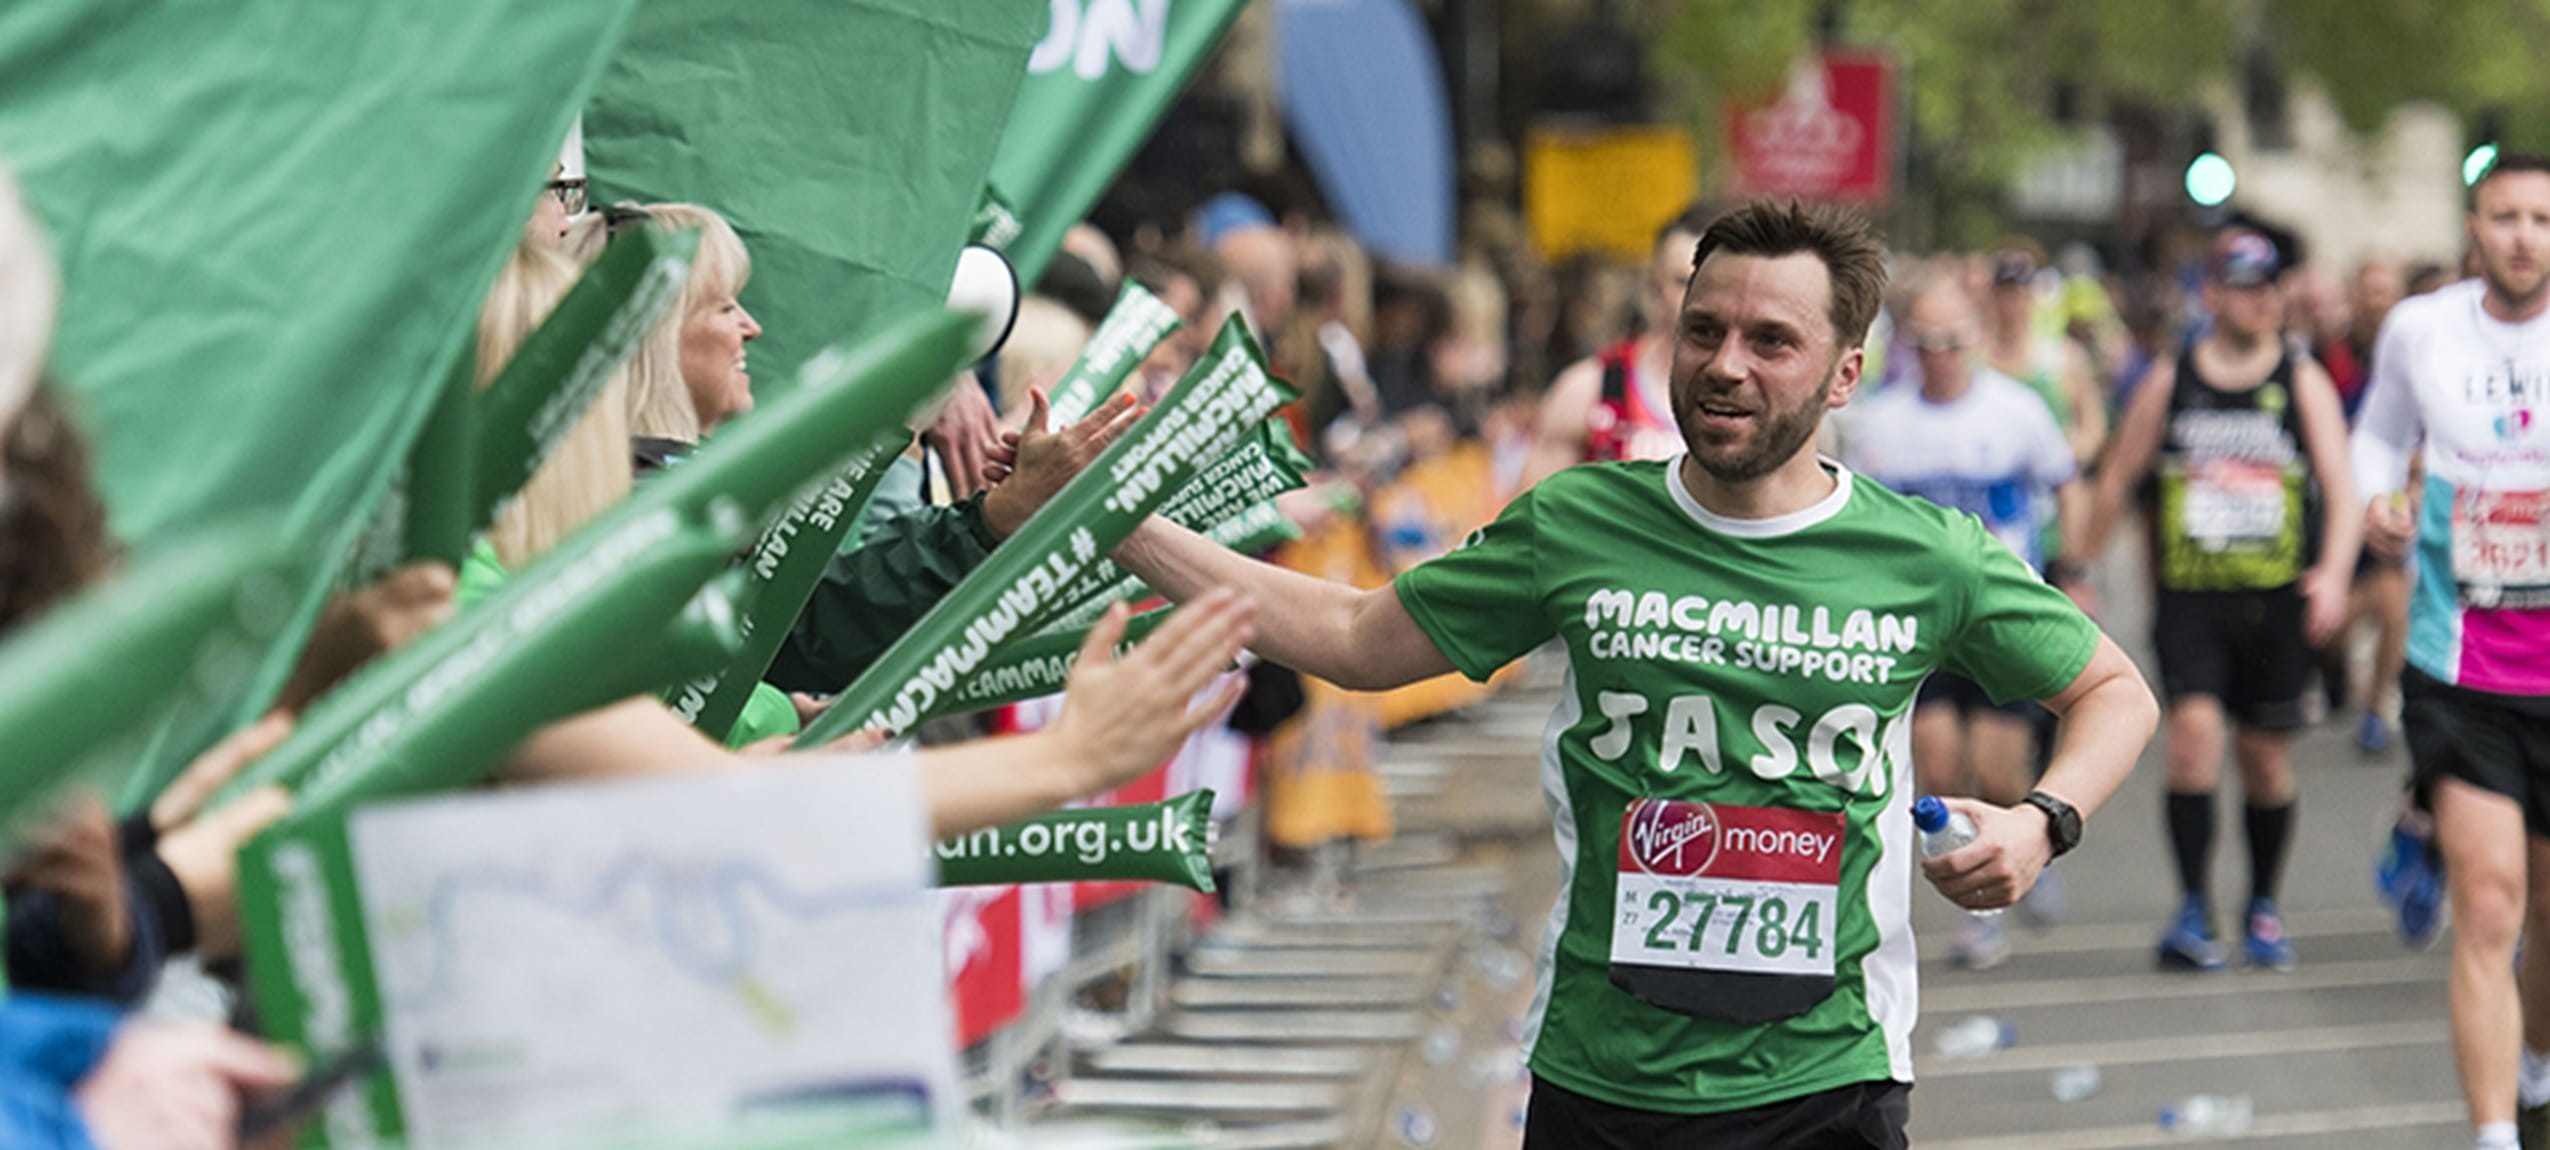 Macmillan runner during the TCS London Marathon